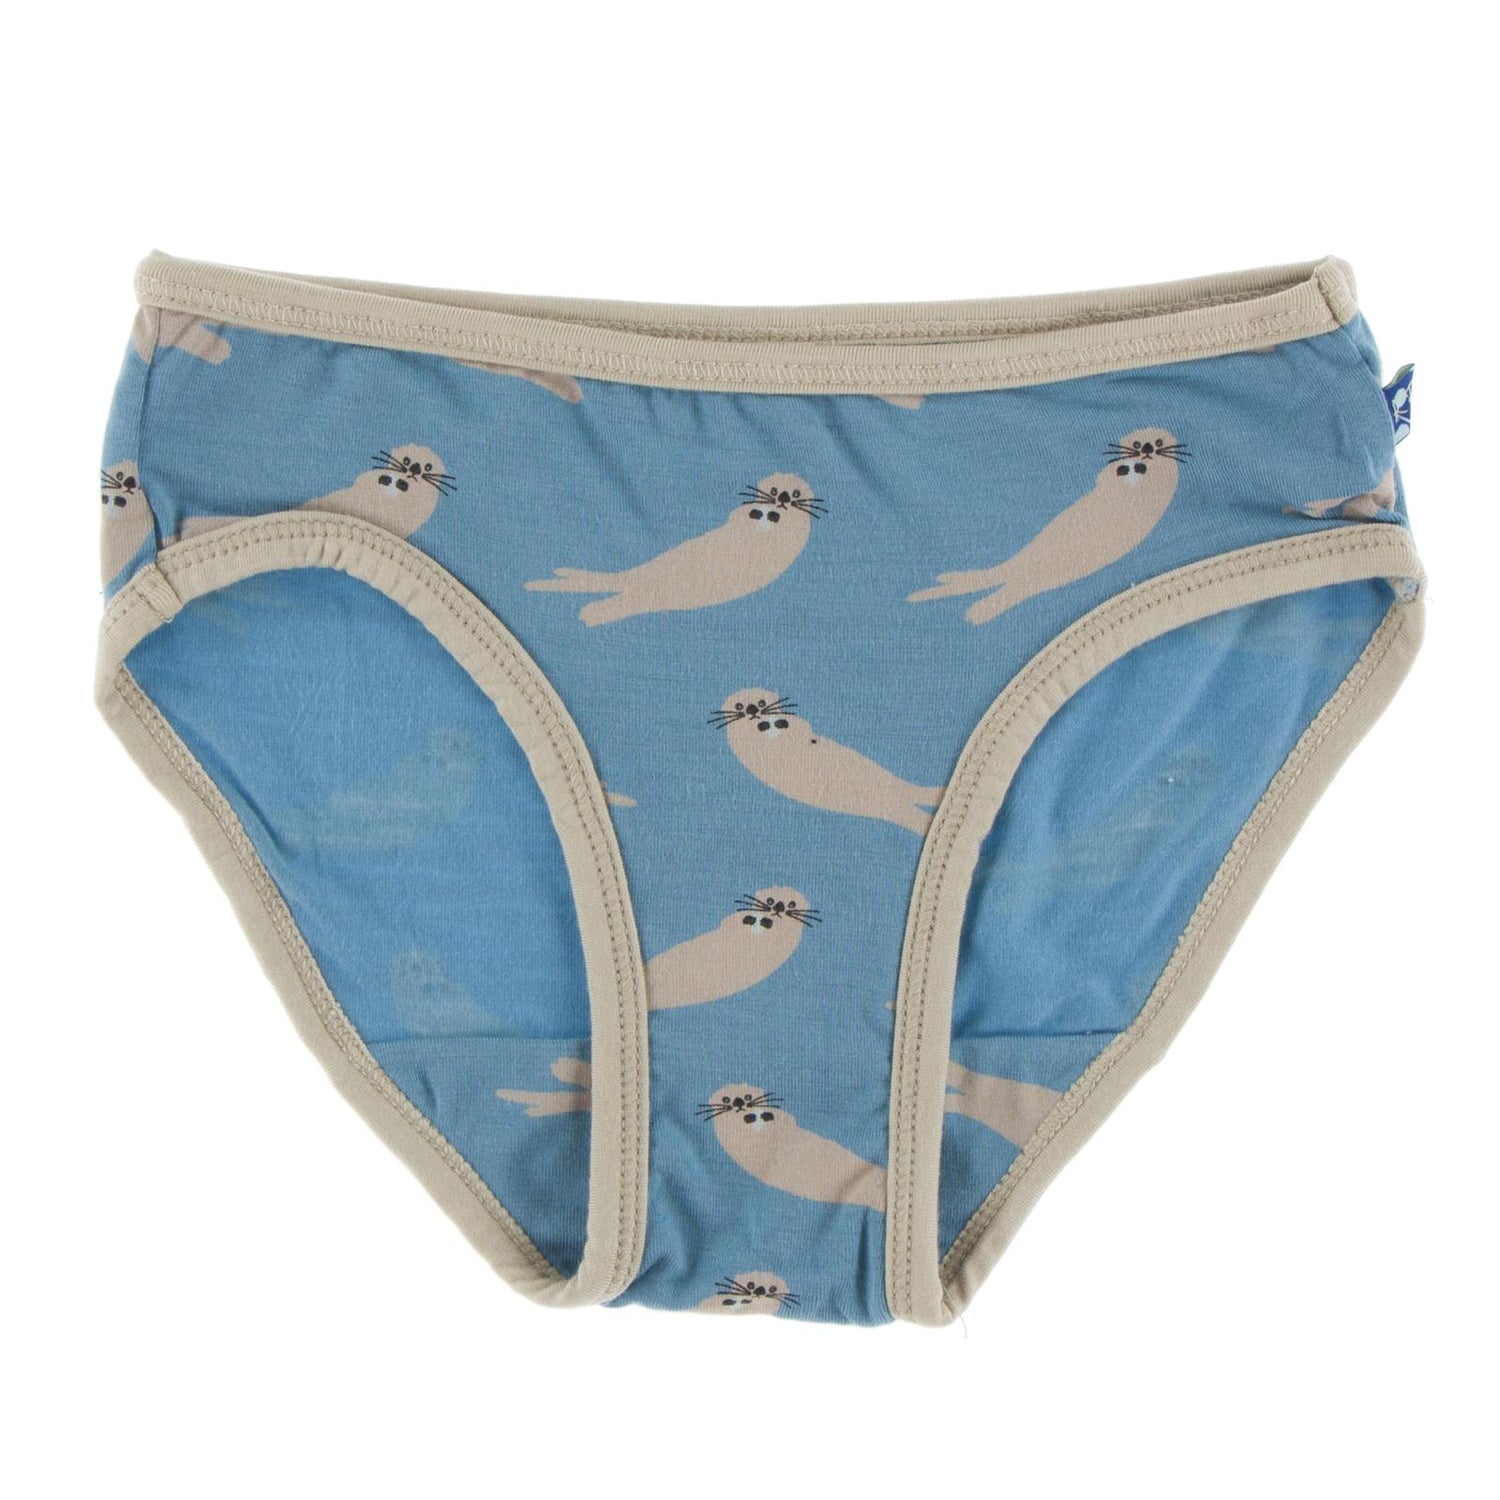 Print Underwear in Blue Moon Sea Otters with Burlap Trim